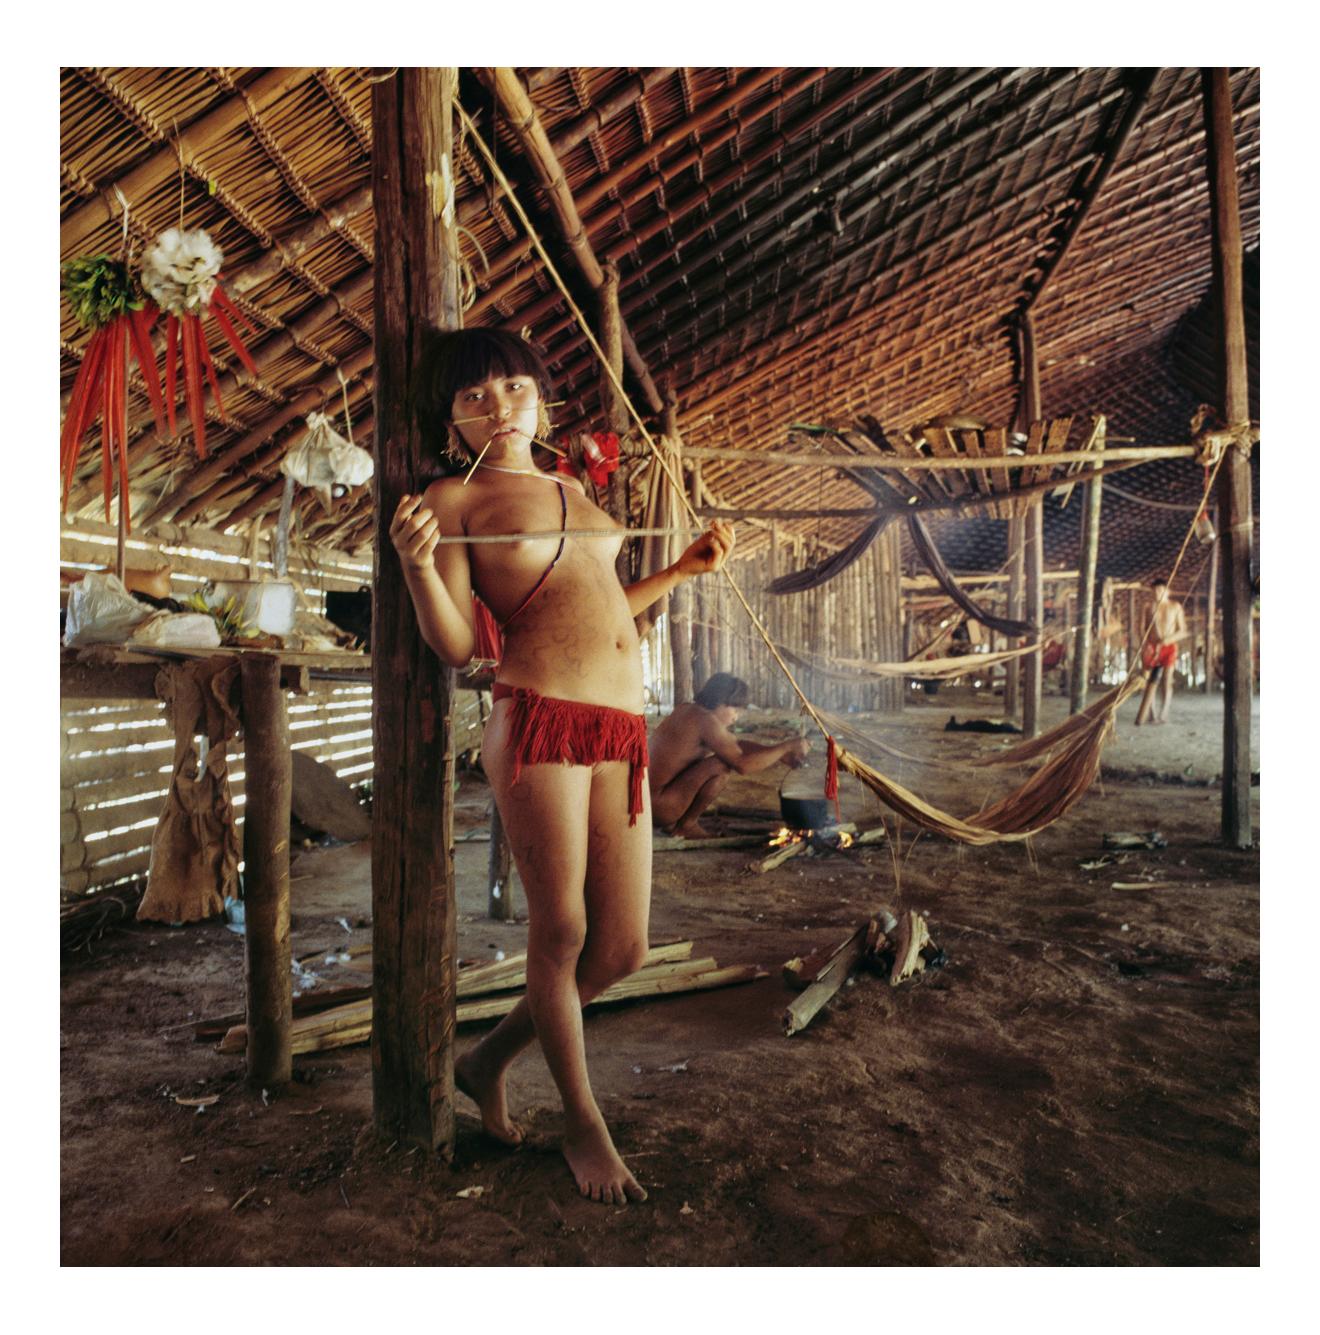 Yanomami, Amazonia, Brazil, January 1995